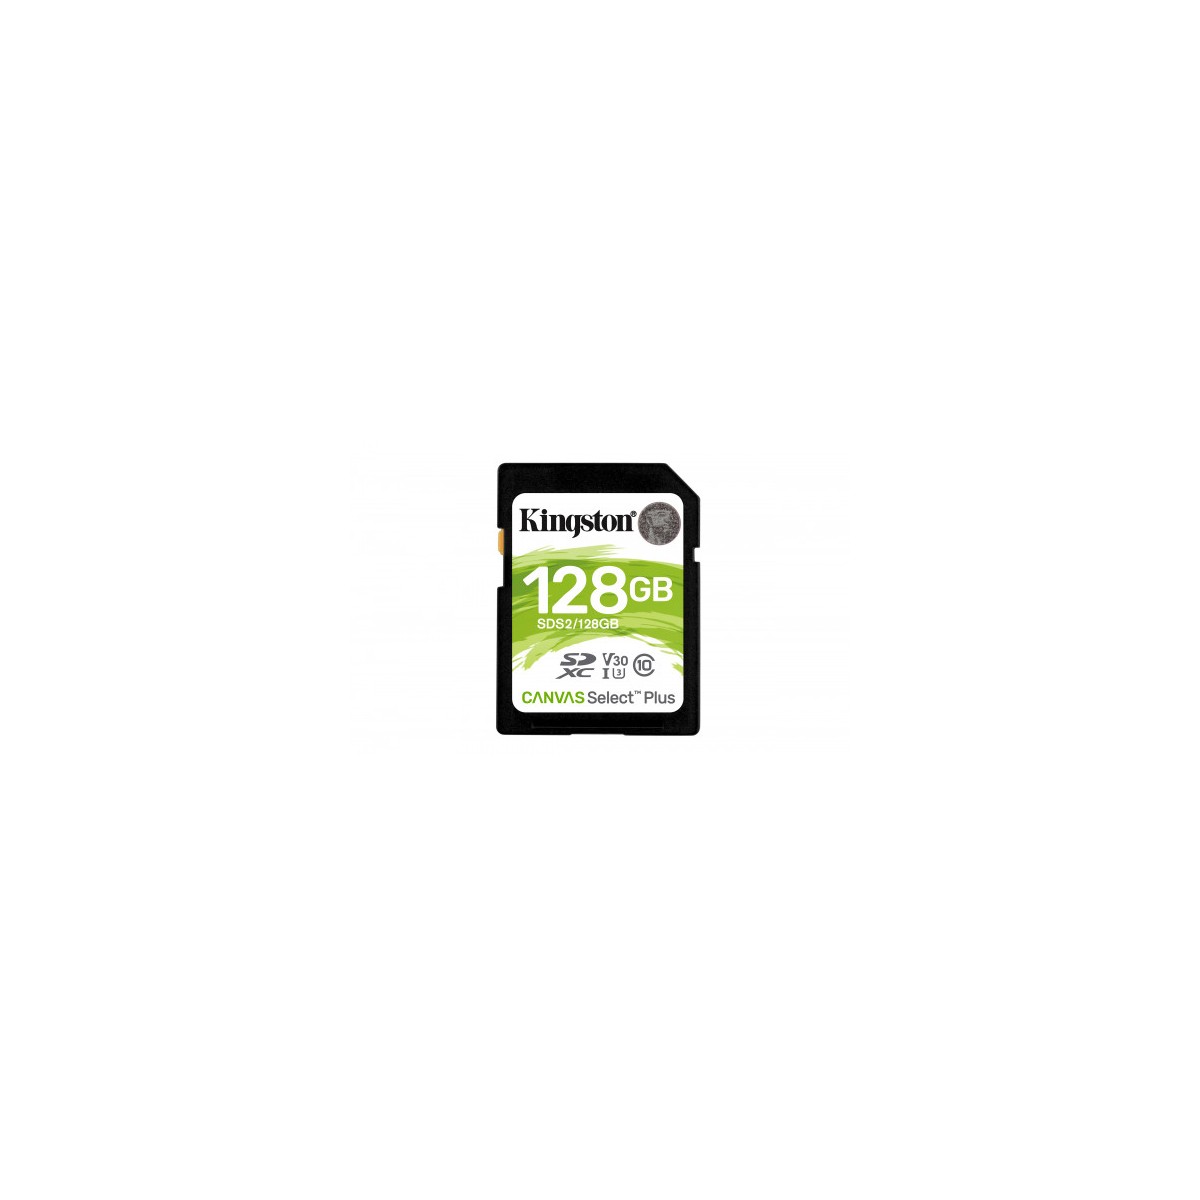 Kingston Technology Canvas Select Plus memoria flash 128 GB SDXC Clase 10 UHS I